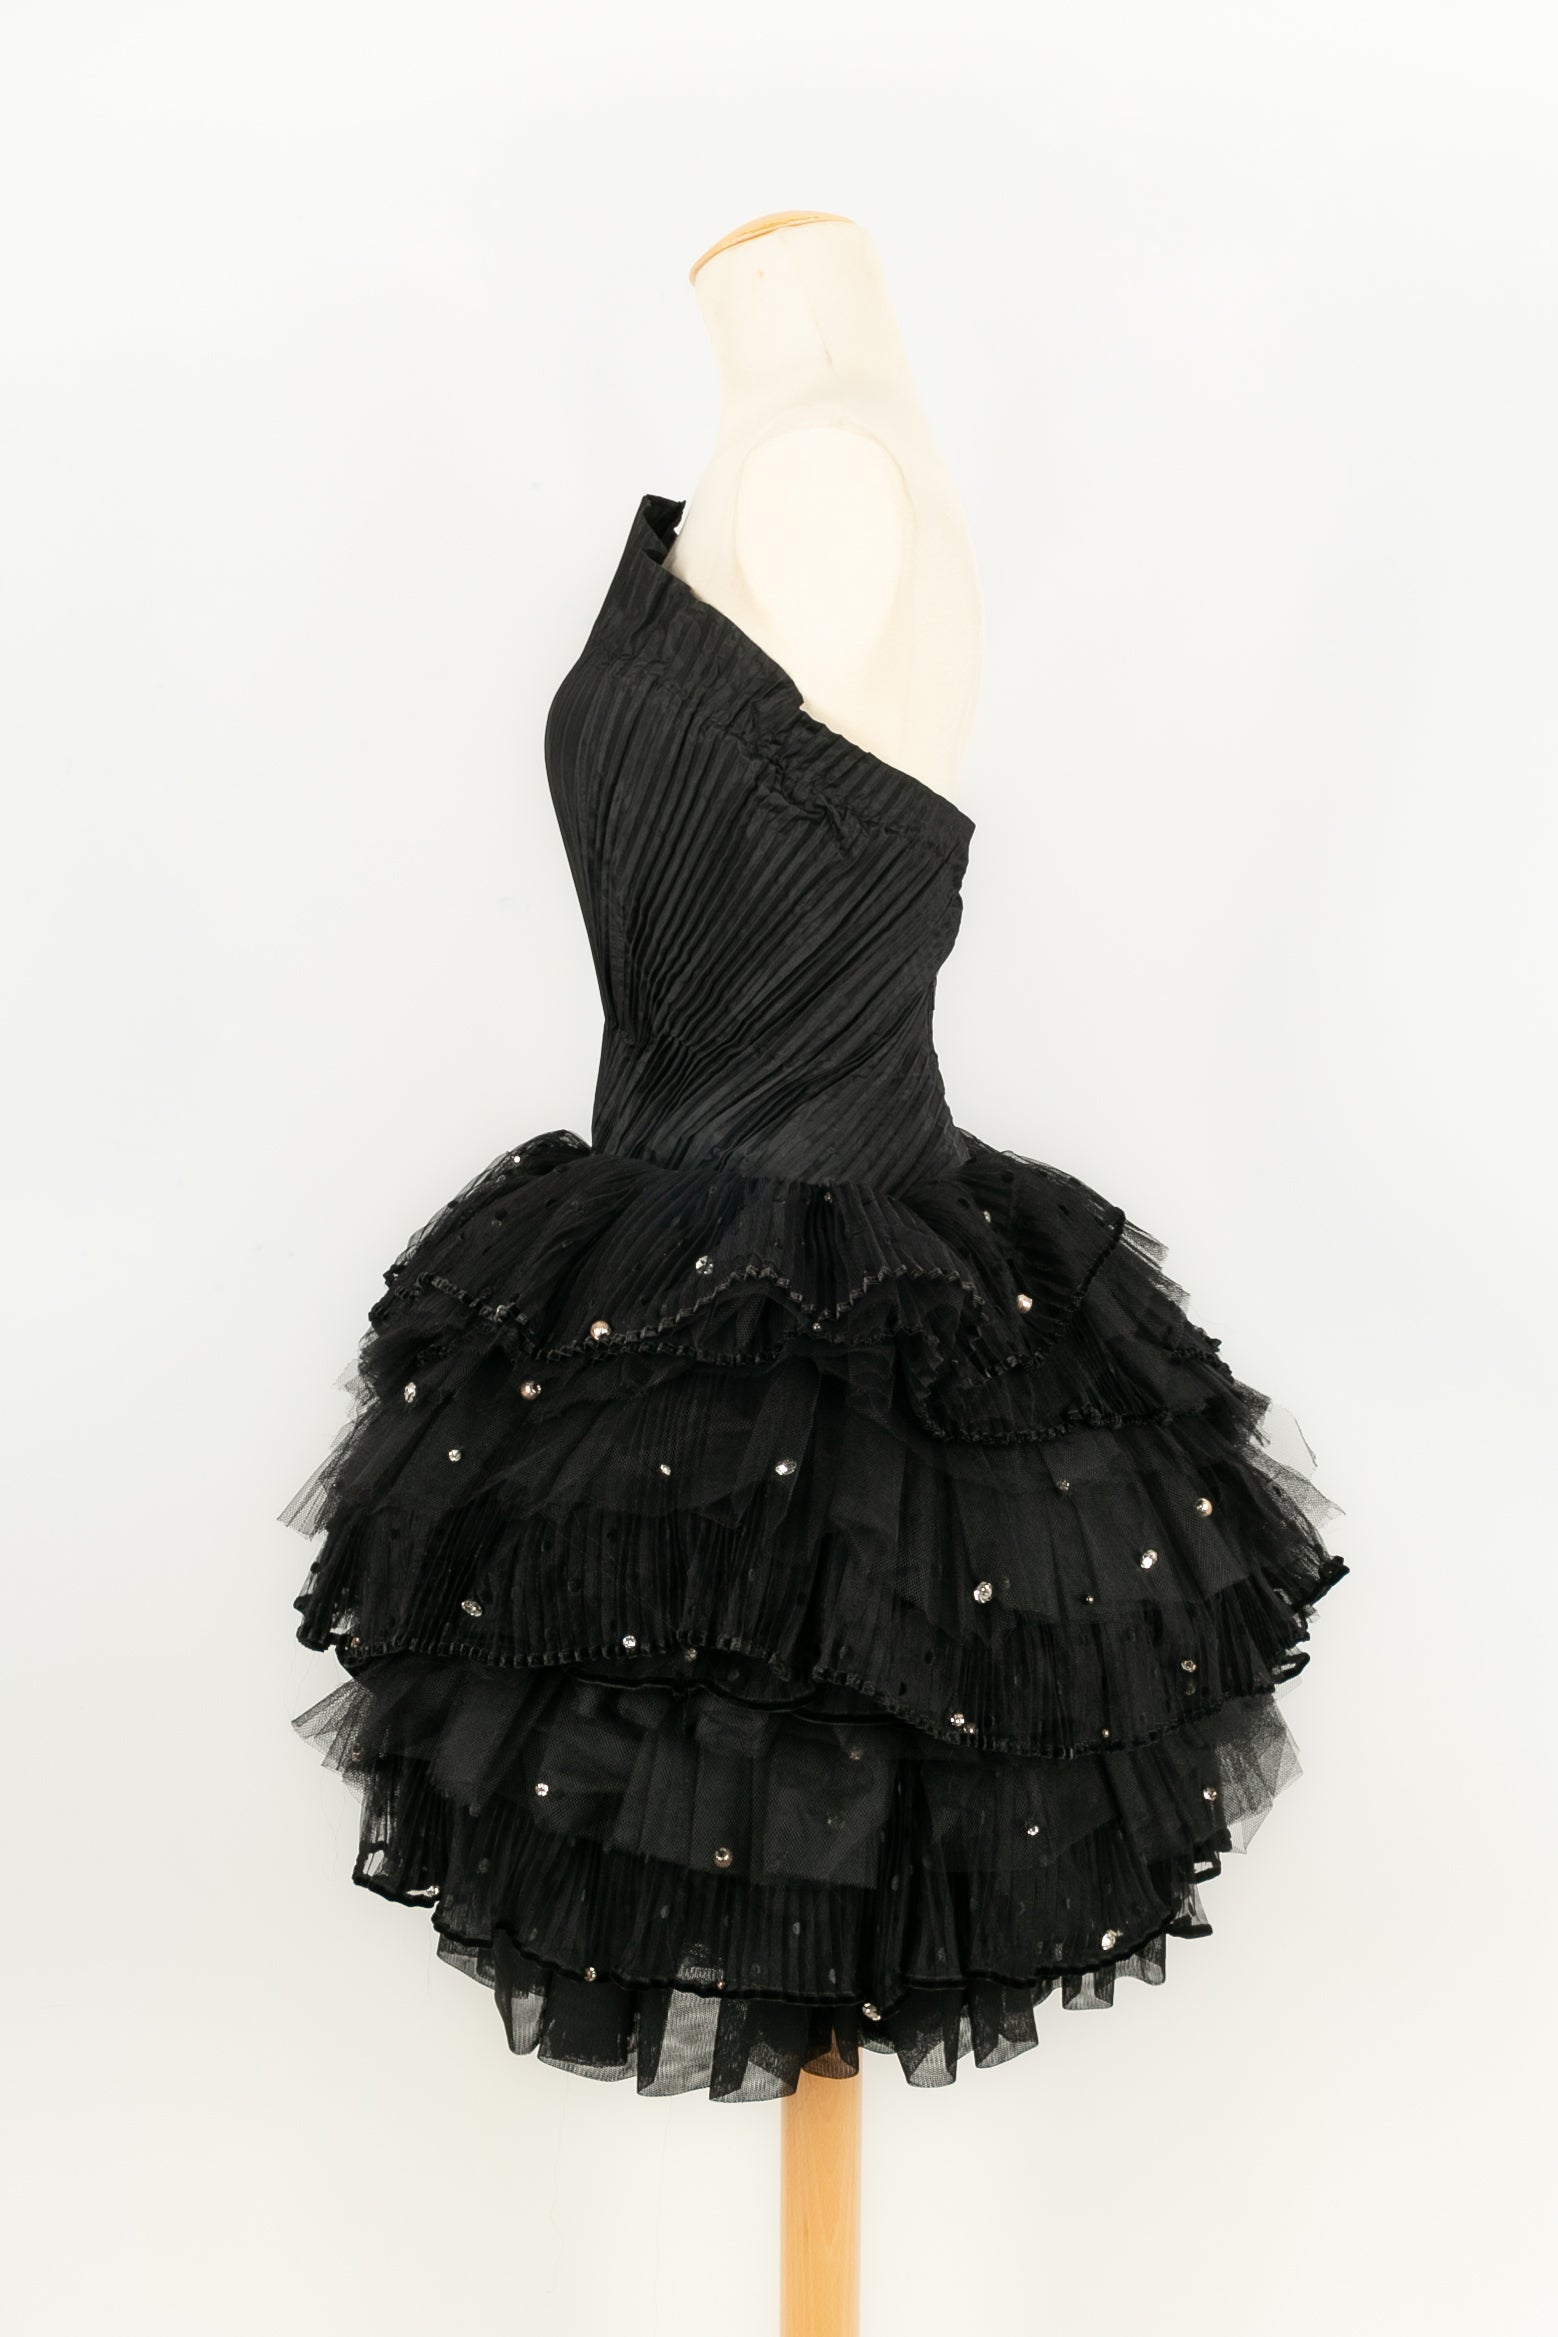 Louis Feraud Draped Black Dress